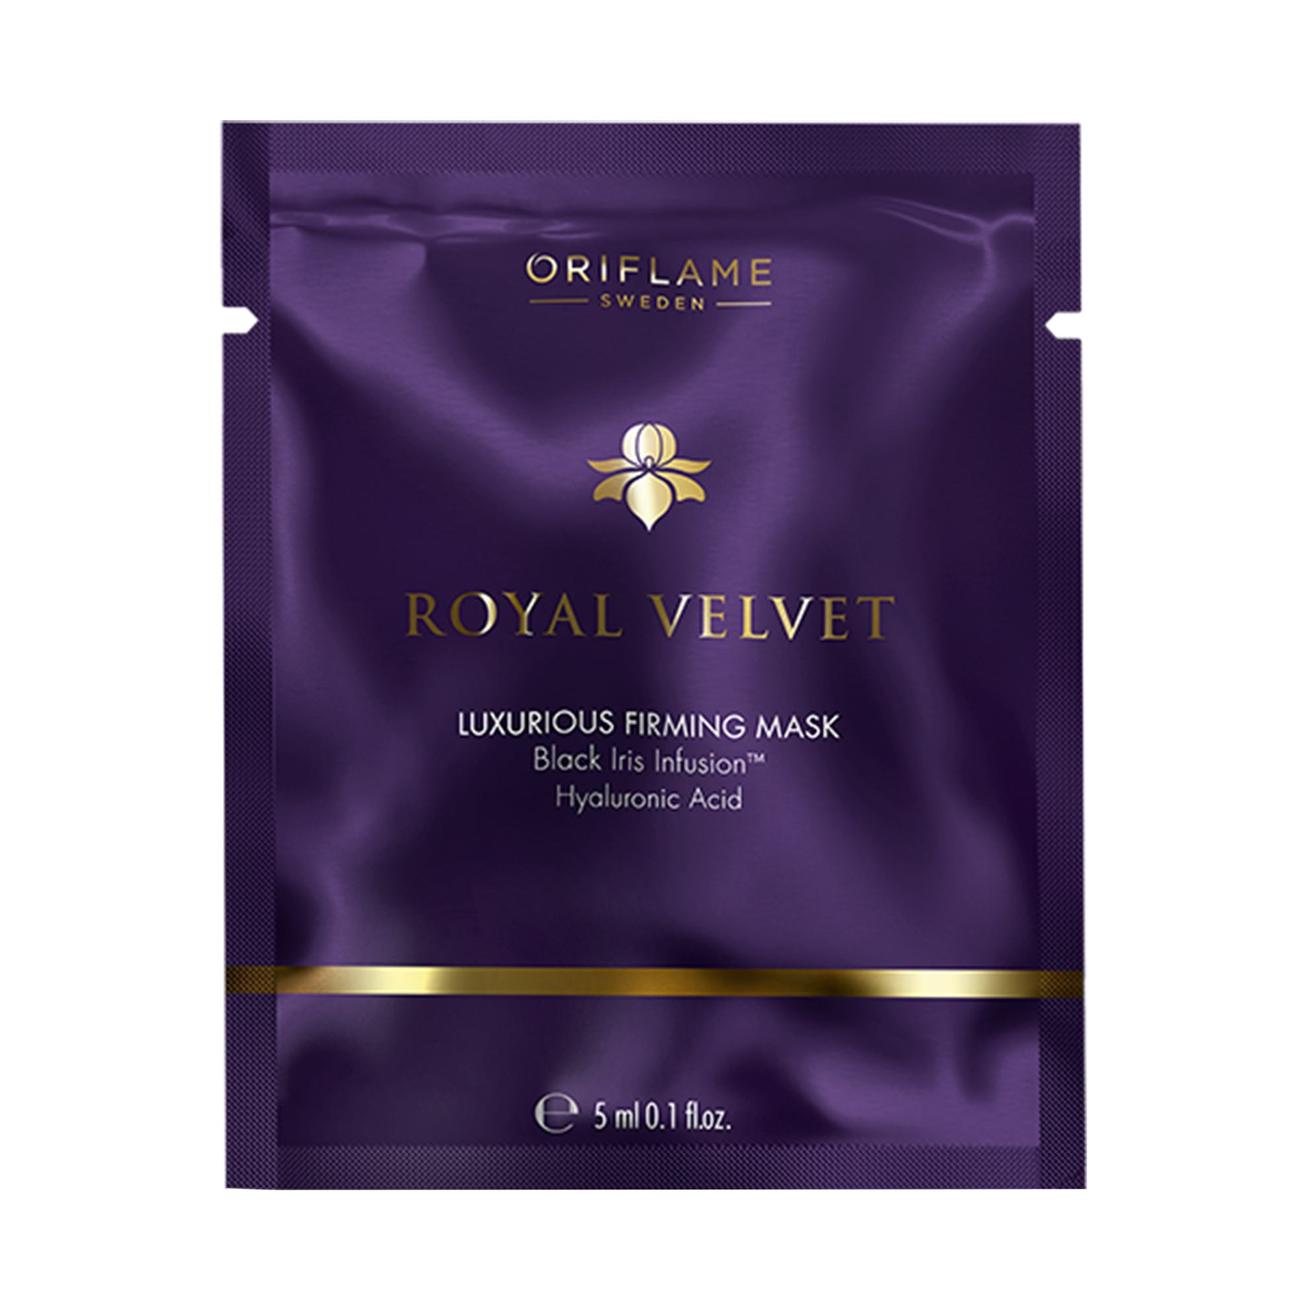 Oferta de Mascarilla Reafirmante Royal Velvet por $5999 en Oriflame